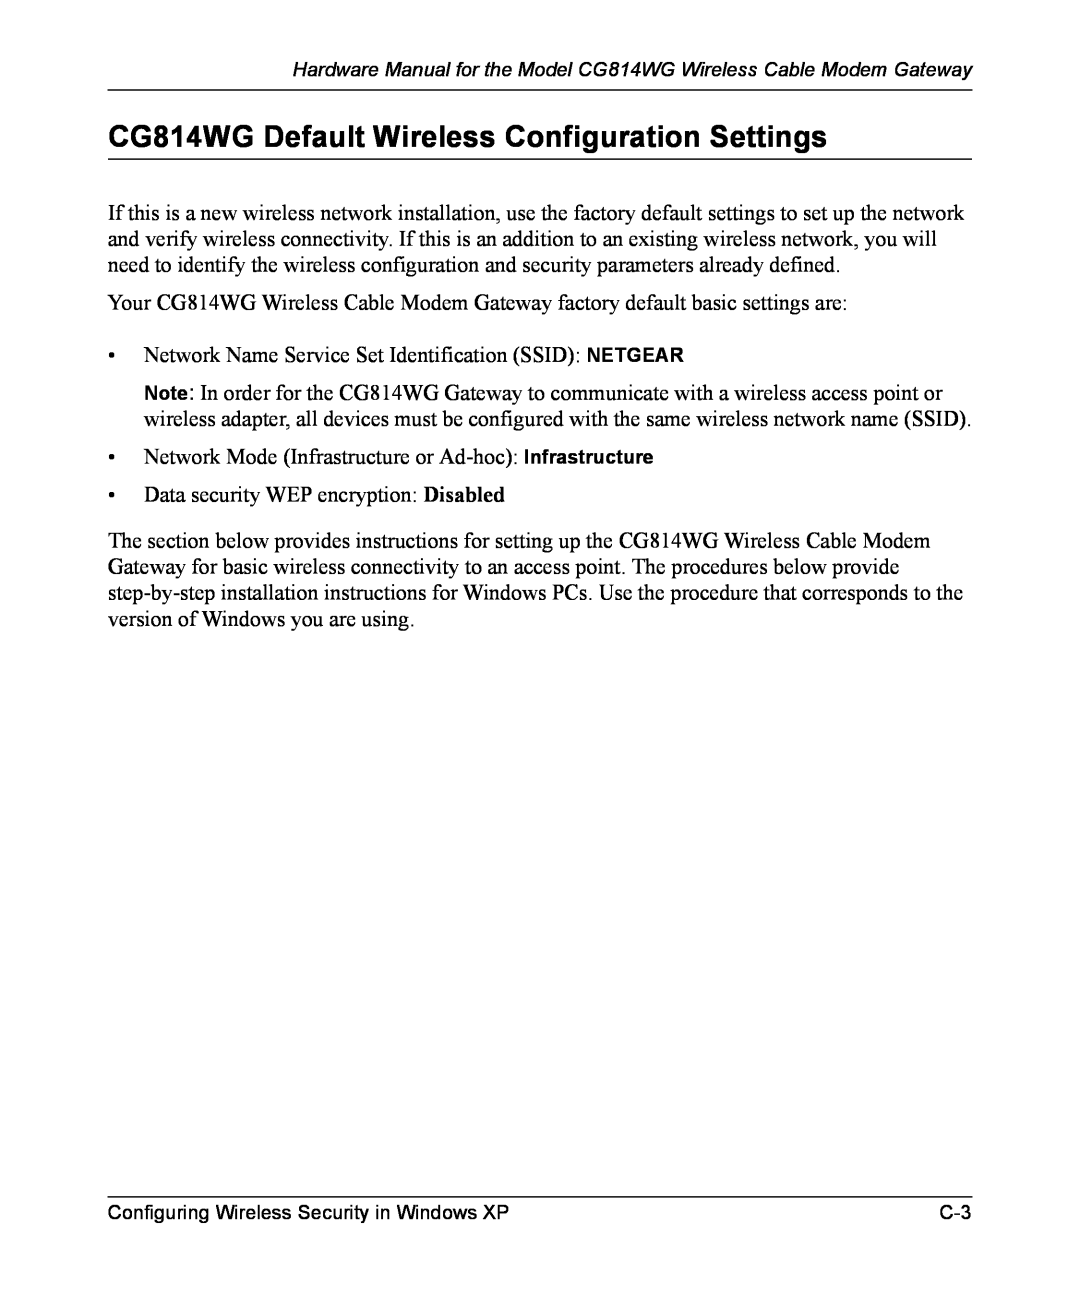 NETGEAR manual CG814WG Default Wireless Configuration Settings 